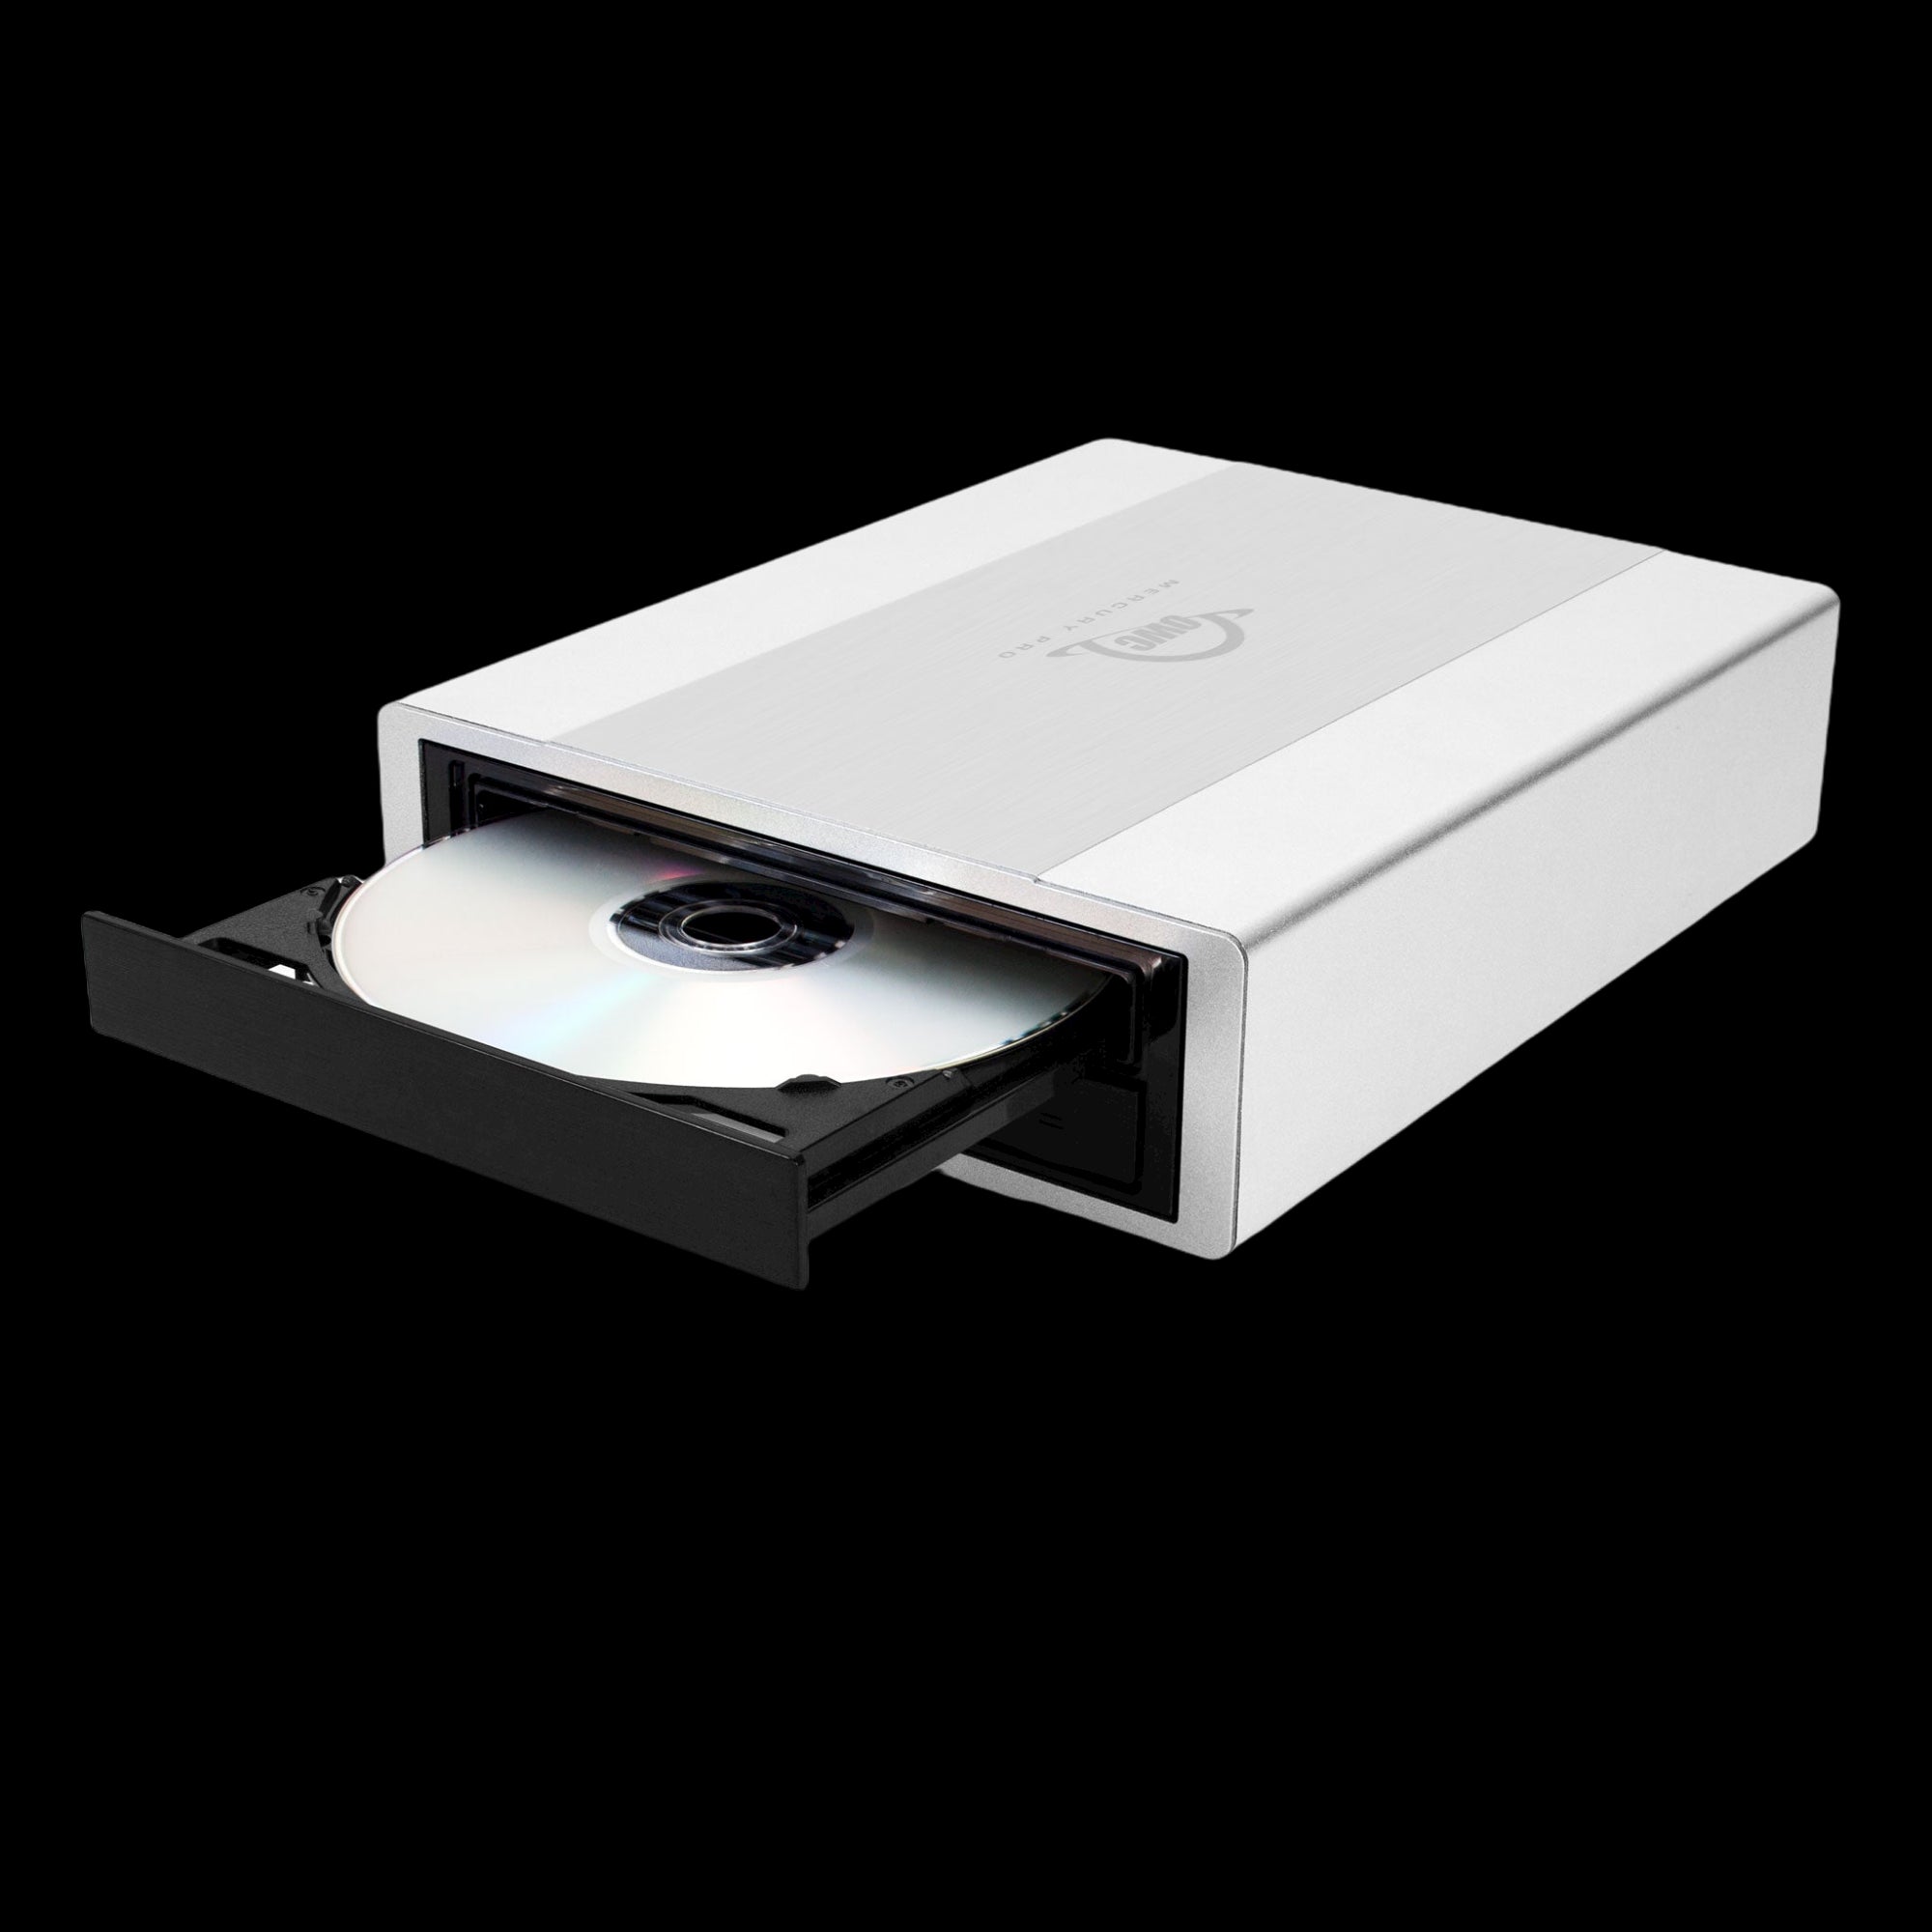 OWC Mercury Pro External USB 3.0 Blu-ray Burner. (16X Blu-ray, 16X